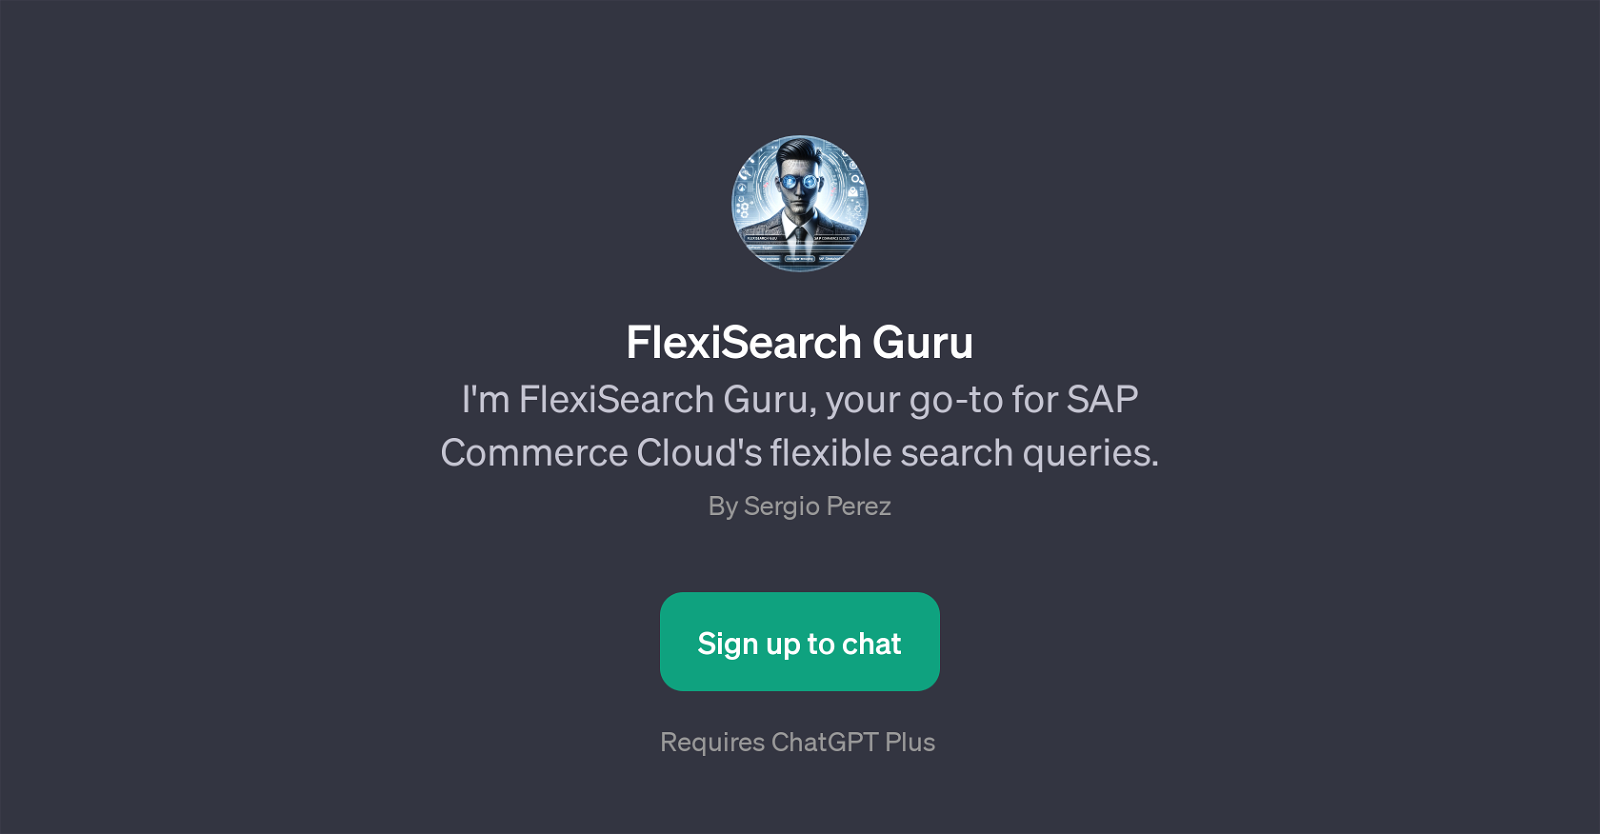 FlexiSearch Guru website